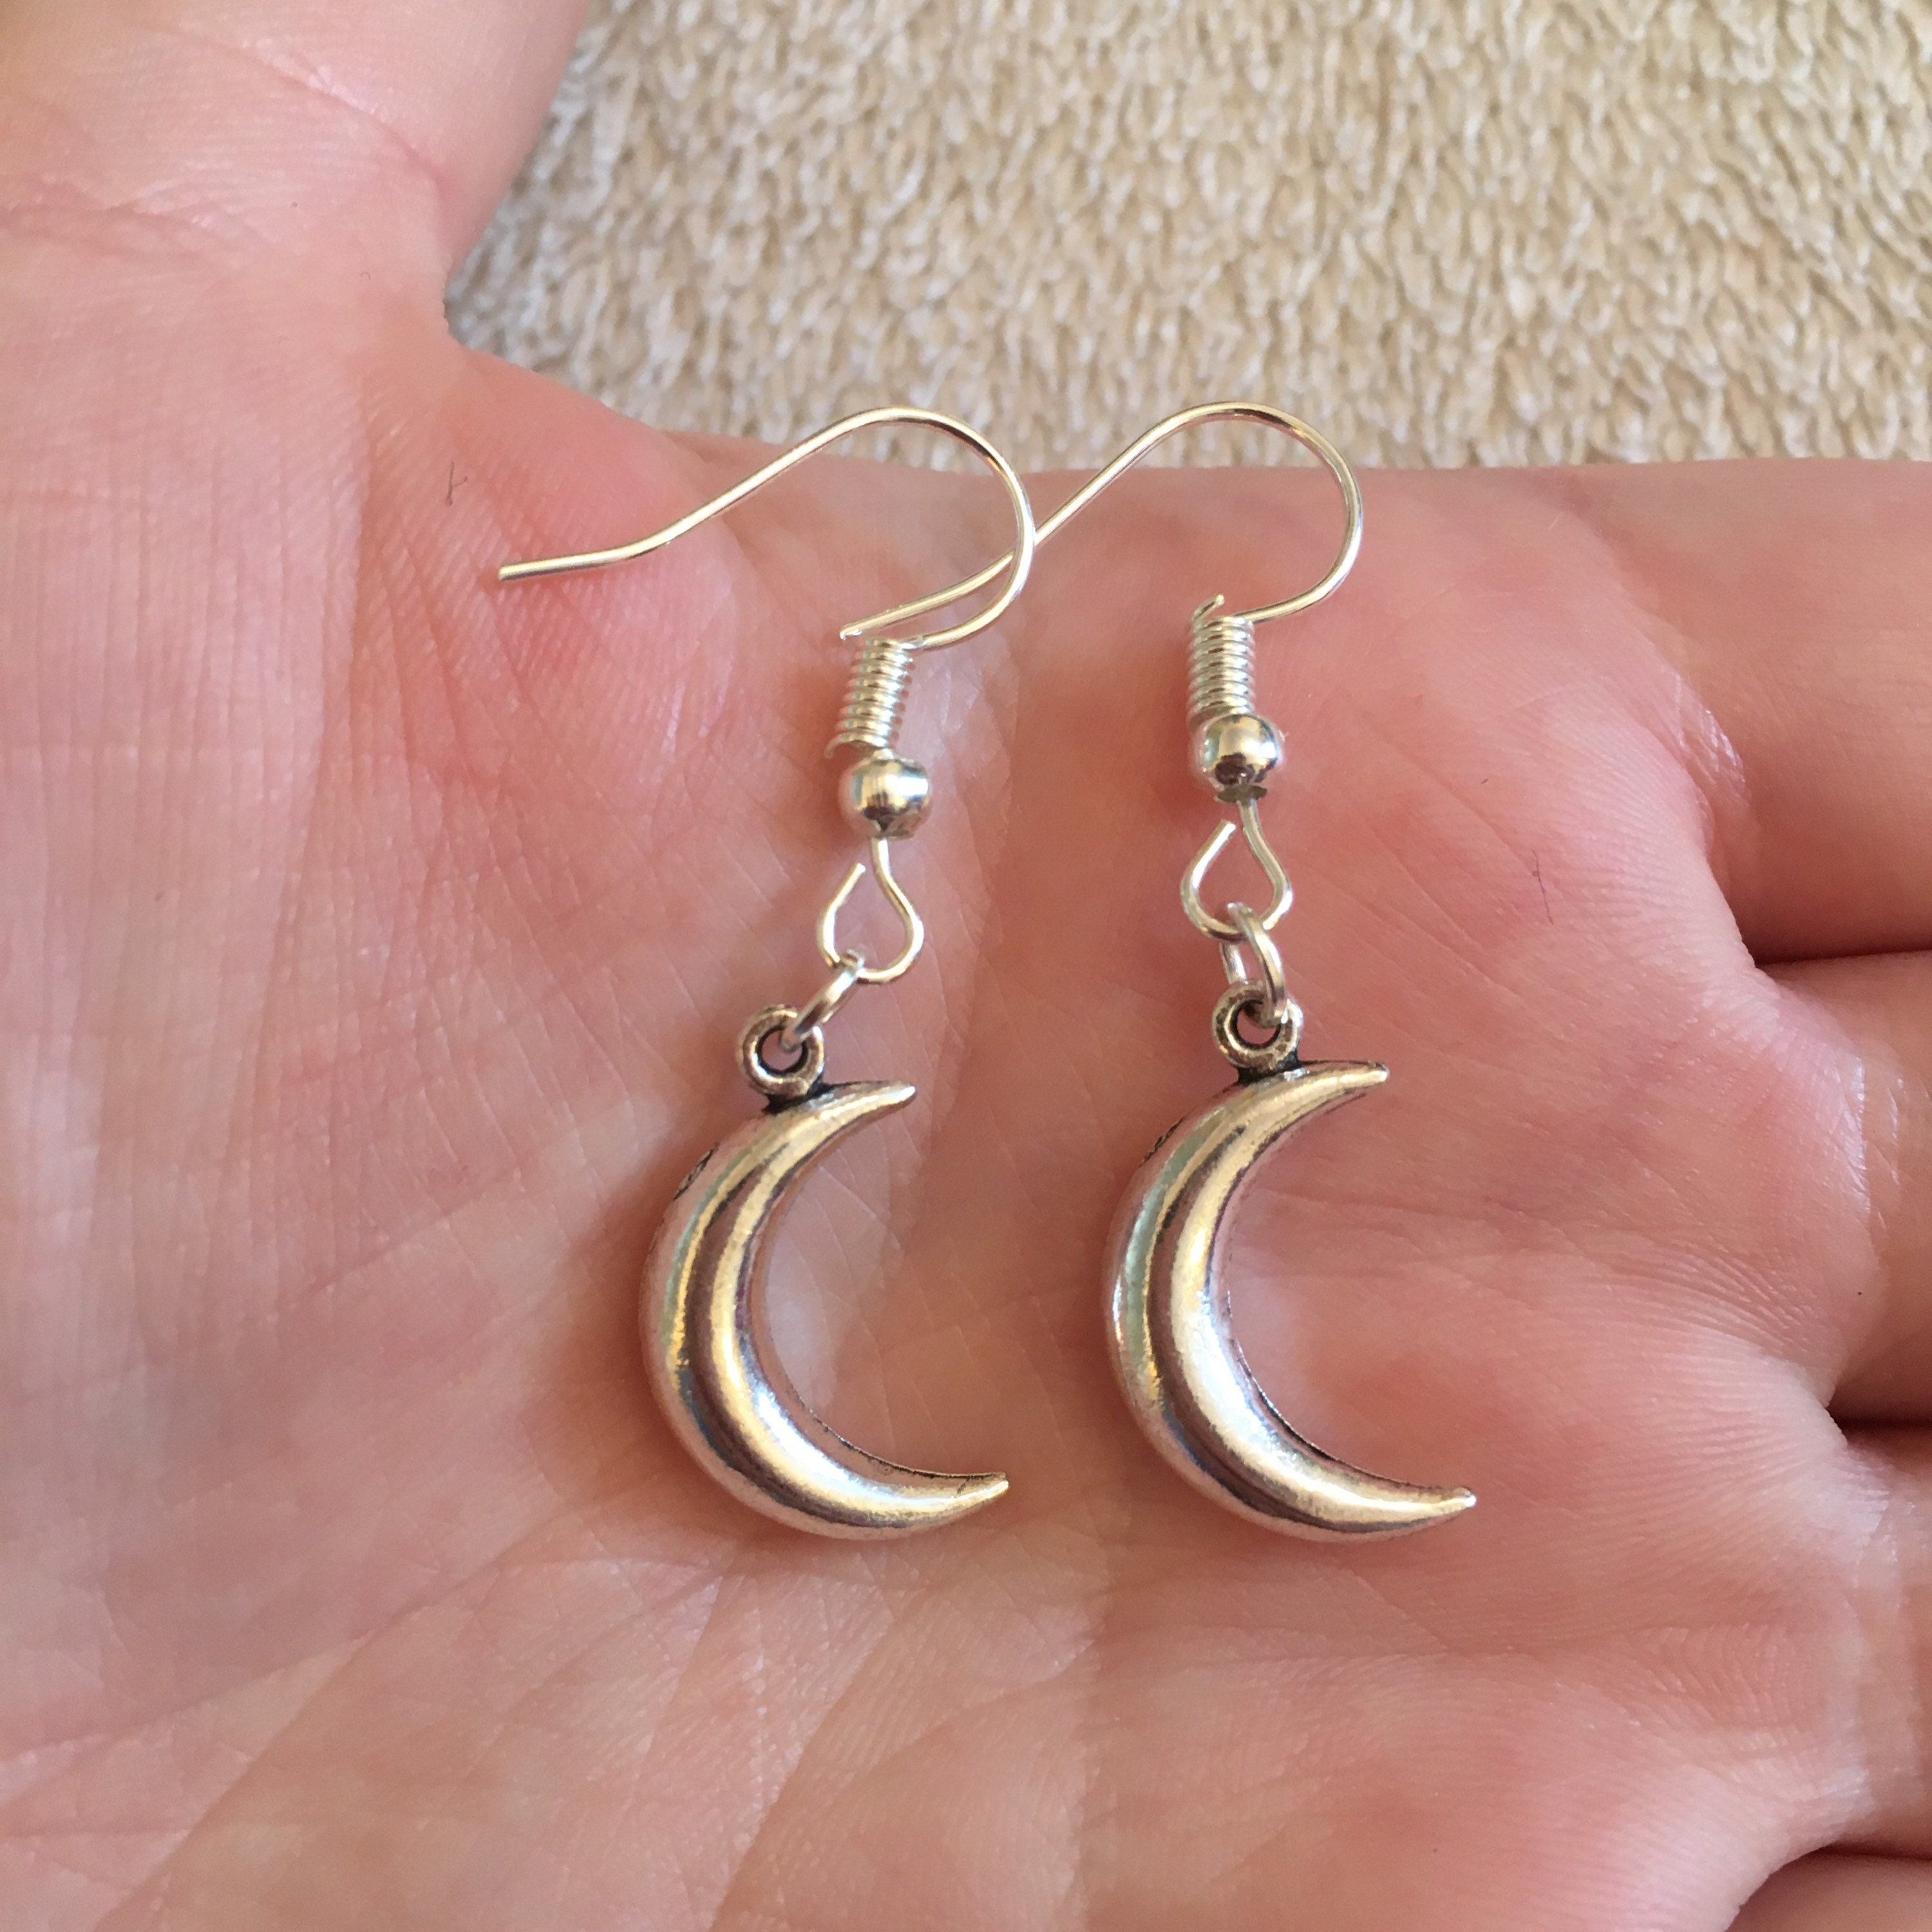 Crescent Moon Polymer Clay Earrings, Half Moon Earrings, Modern Statement  Earrings, Stainless Steel, Black Moon Earrings, Lightweight - Etsy |  Polymer clay earrings, Diy earrings polymer clay, Clay earrings